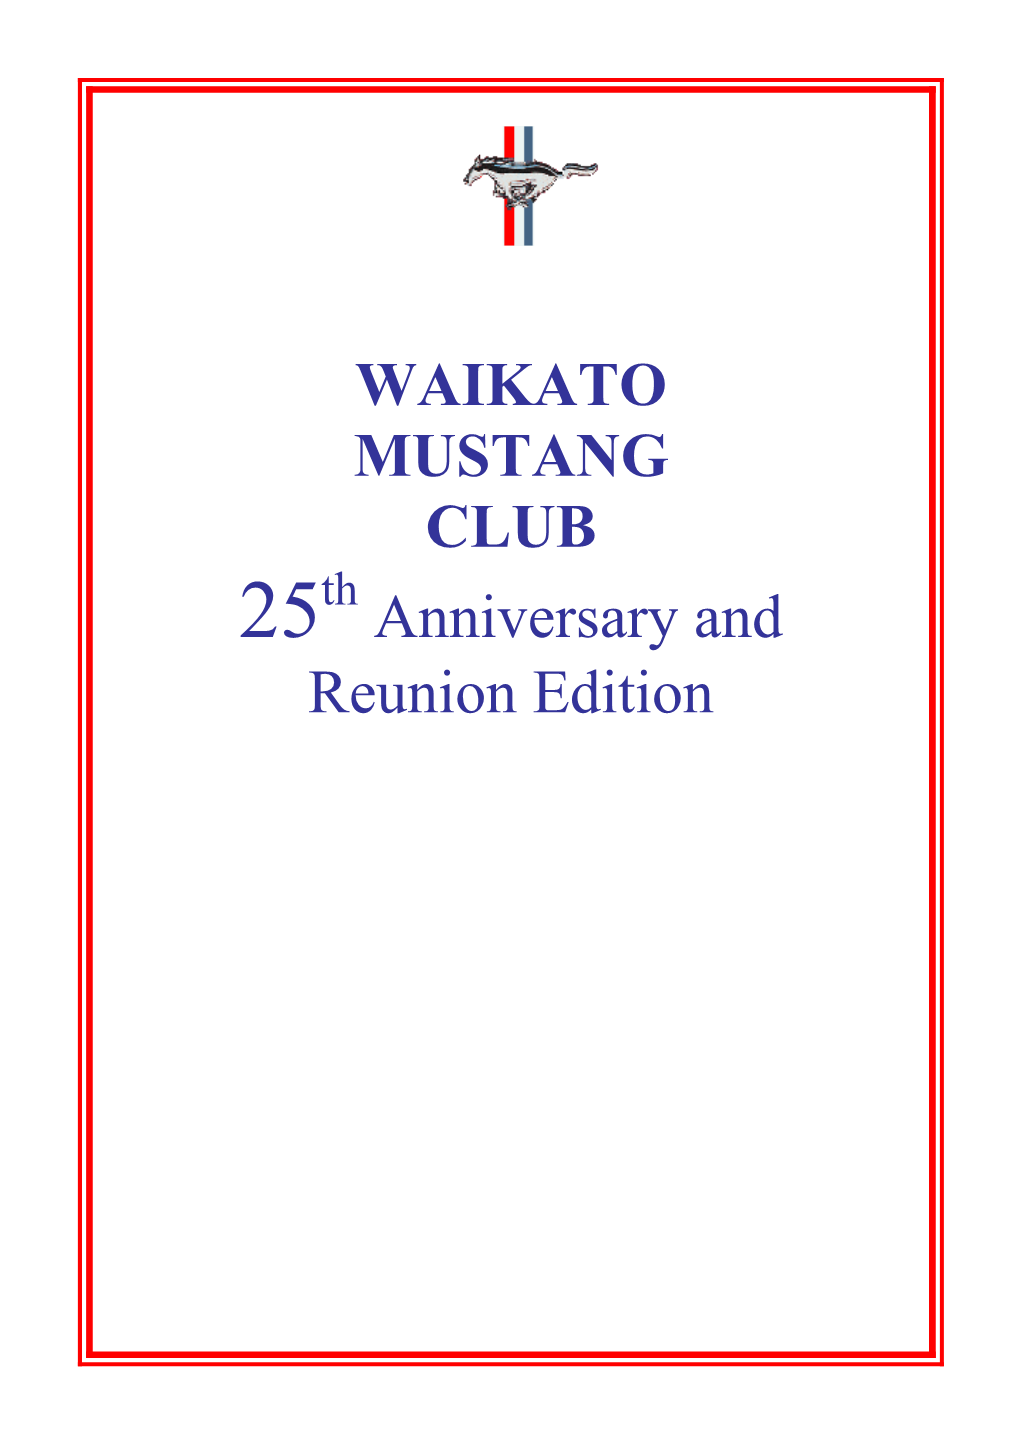 The Waikato Mustang Club